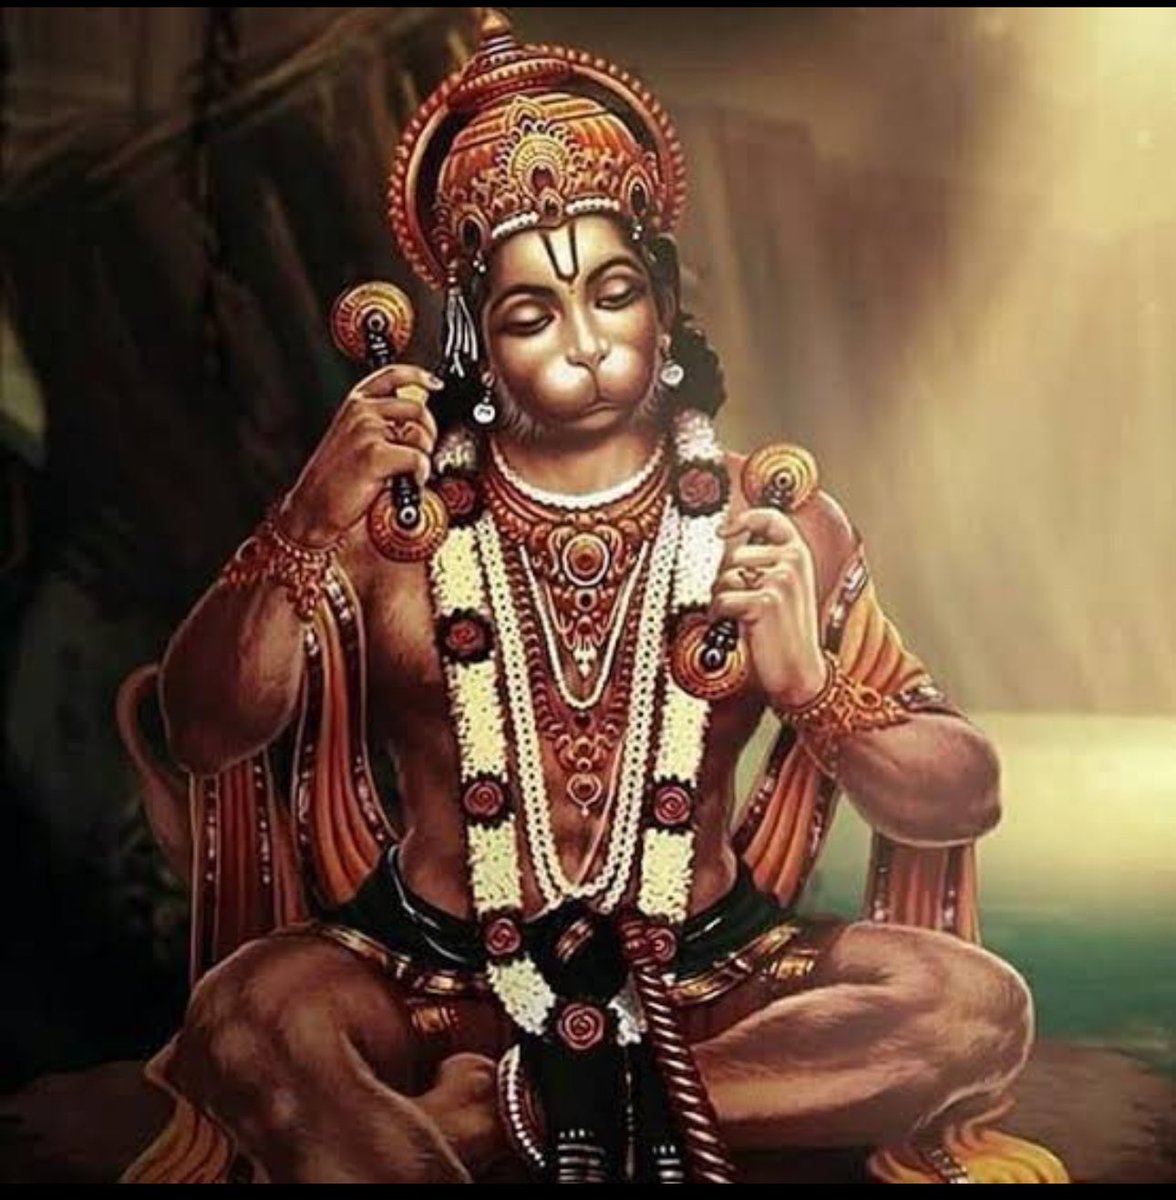 May Lord Hanuman bless us with valour and courage. A very happy Hanuman Janmotsav . Jai Sita Ram 🙏🏼 Jai Hanuman